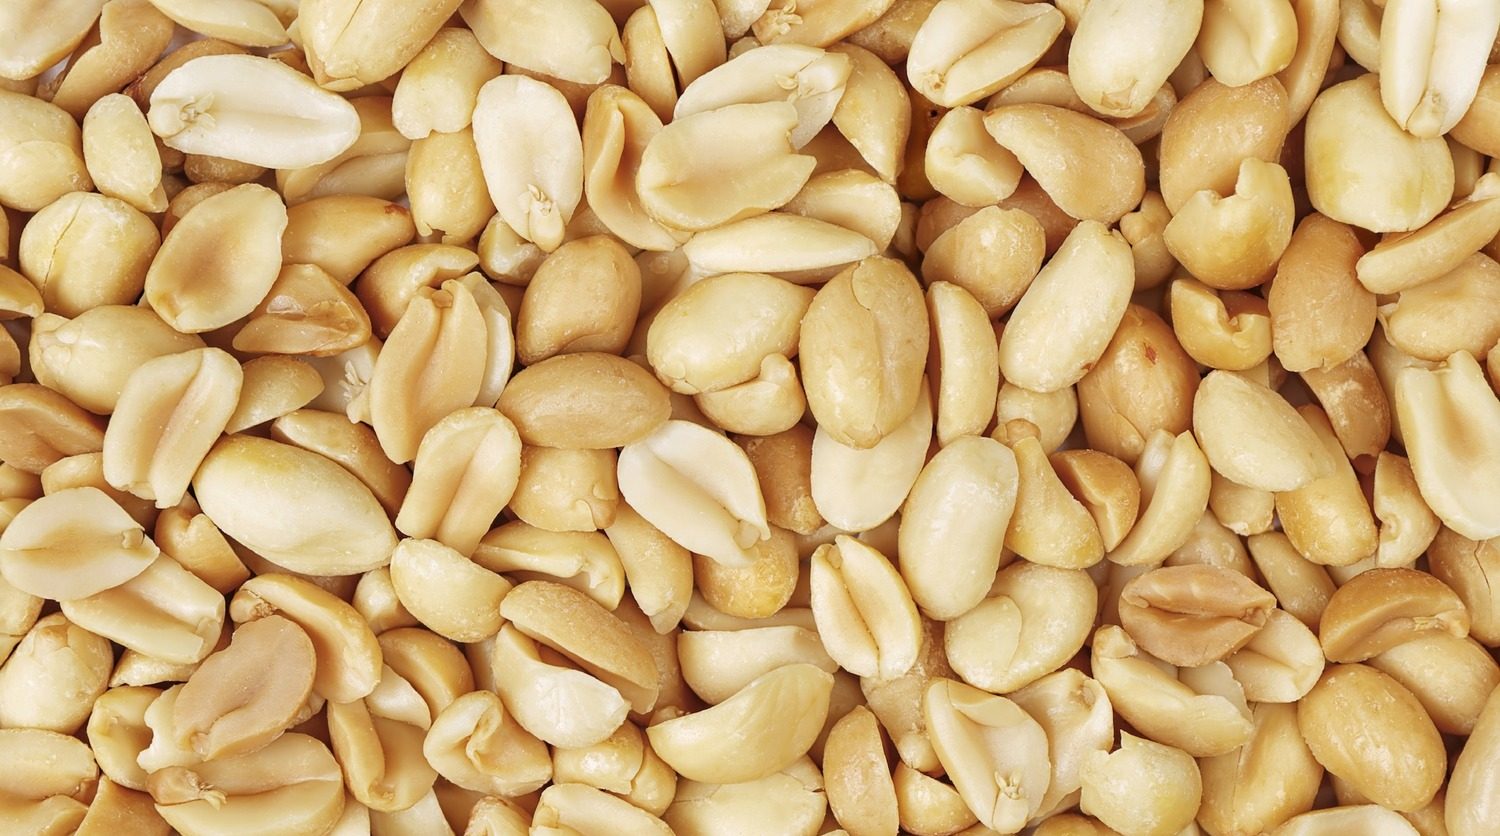 Close up image of peanuts